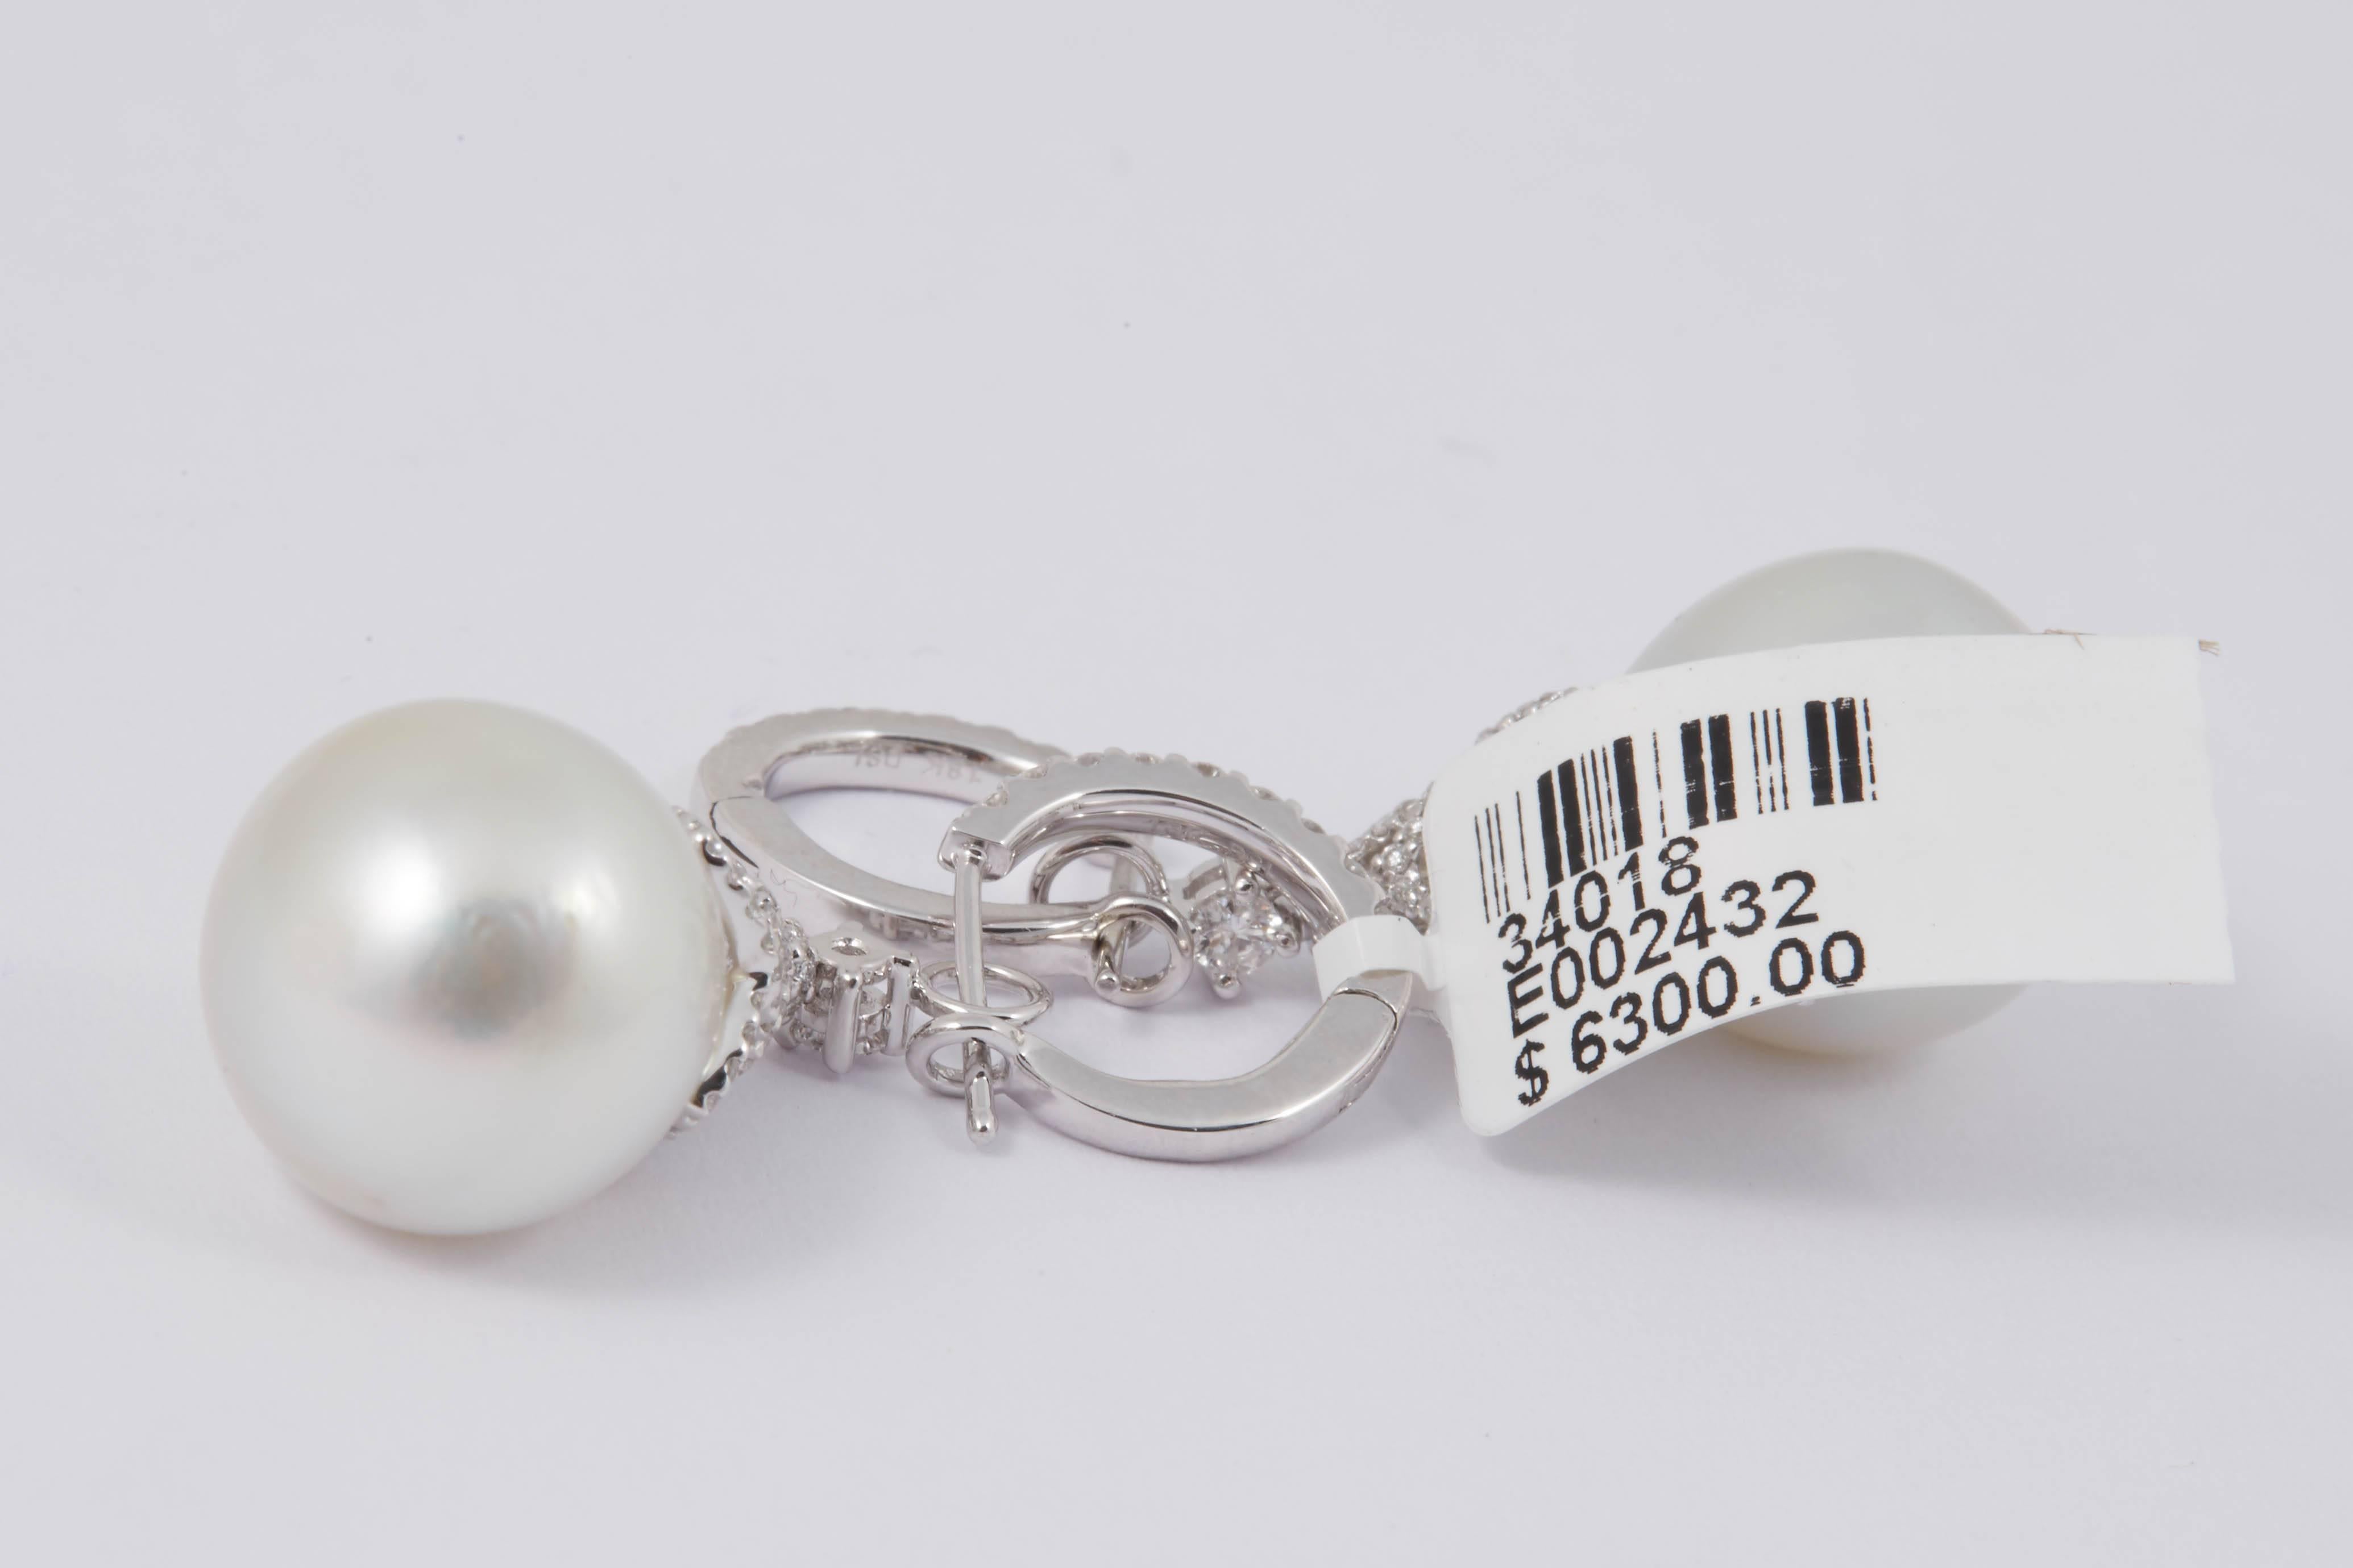 18K White Gold 4.2 g.
South Sea Pearls 13-14 mm each
0.95 Diamonds 1.5 